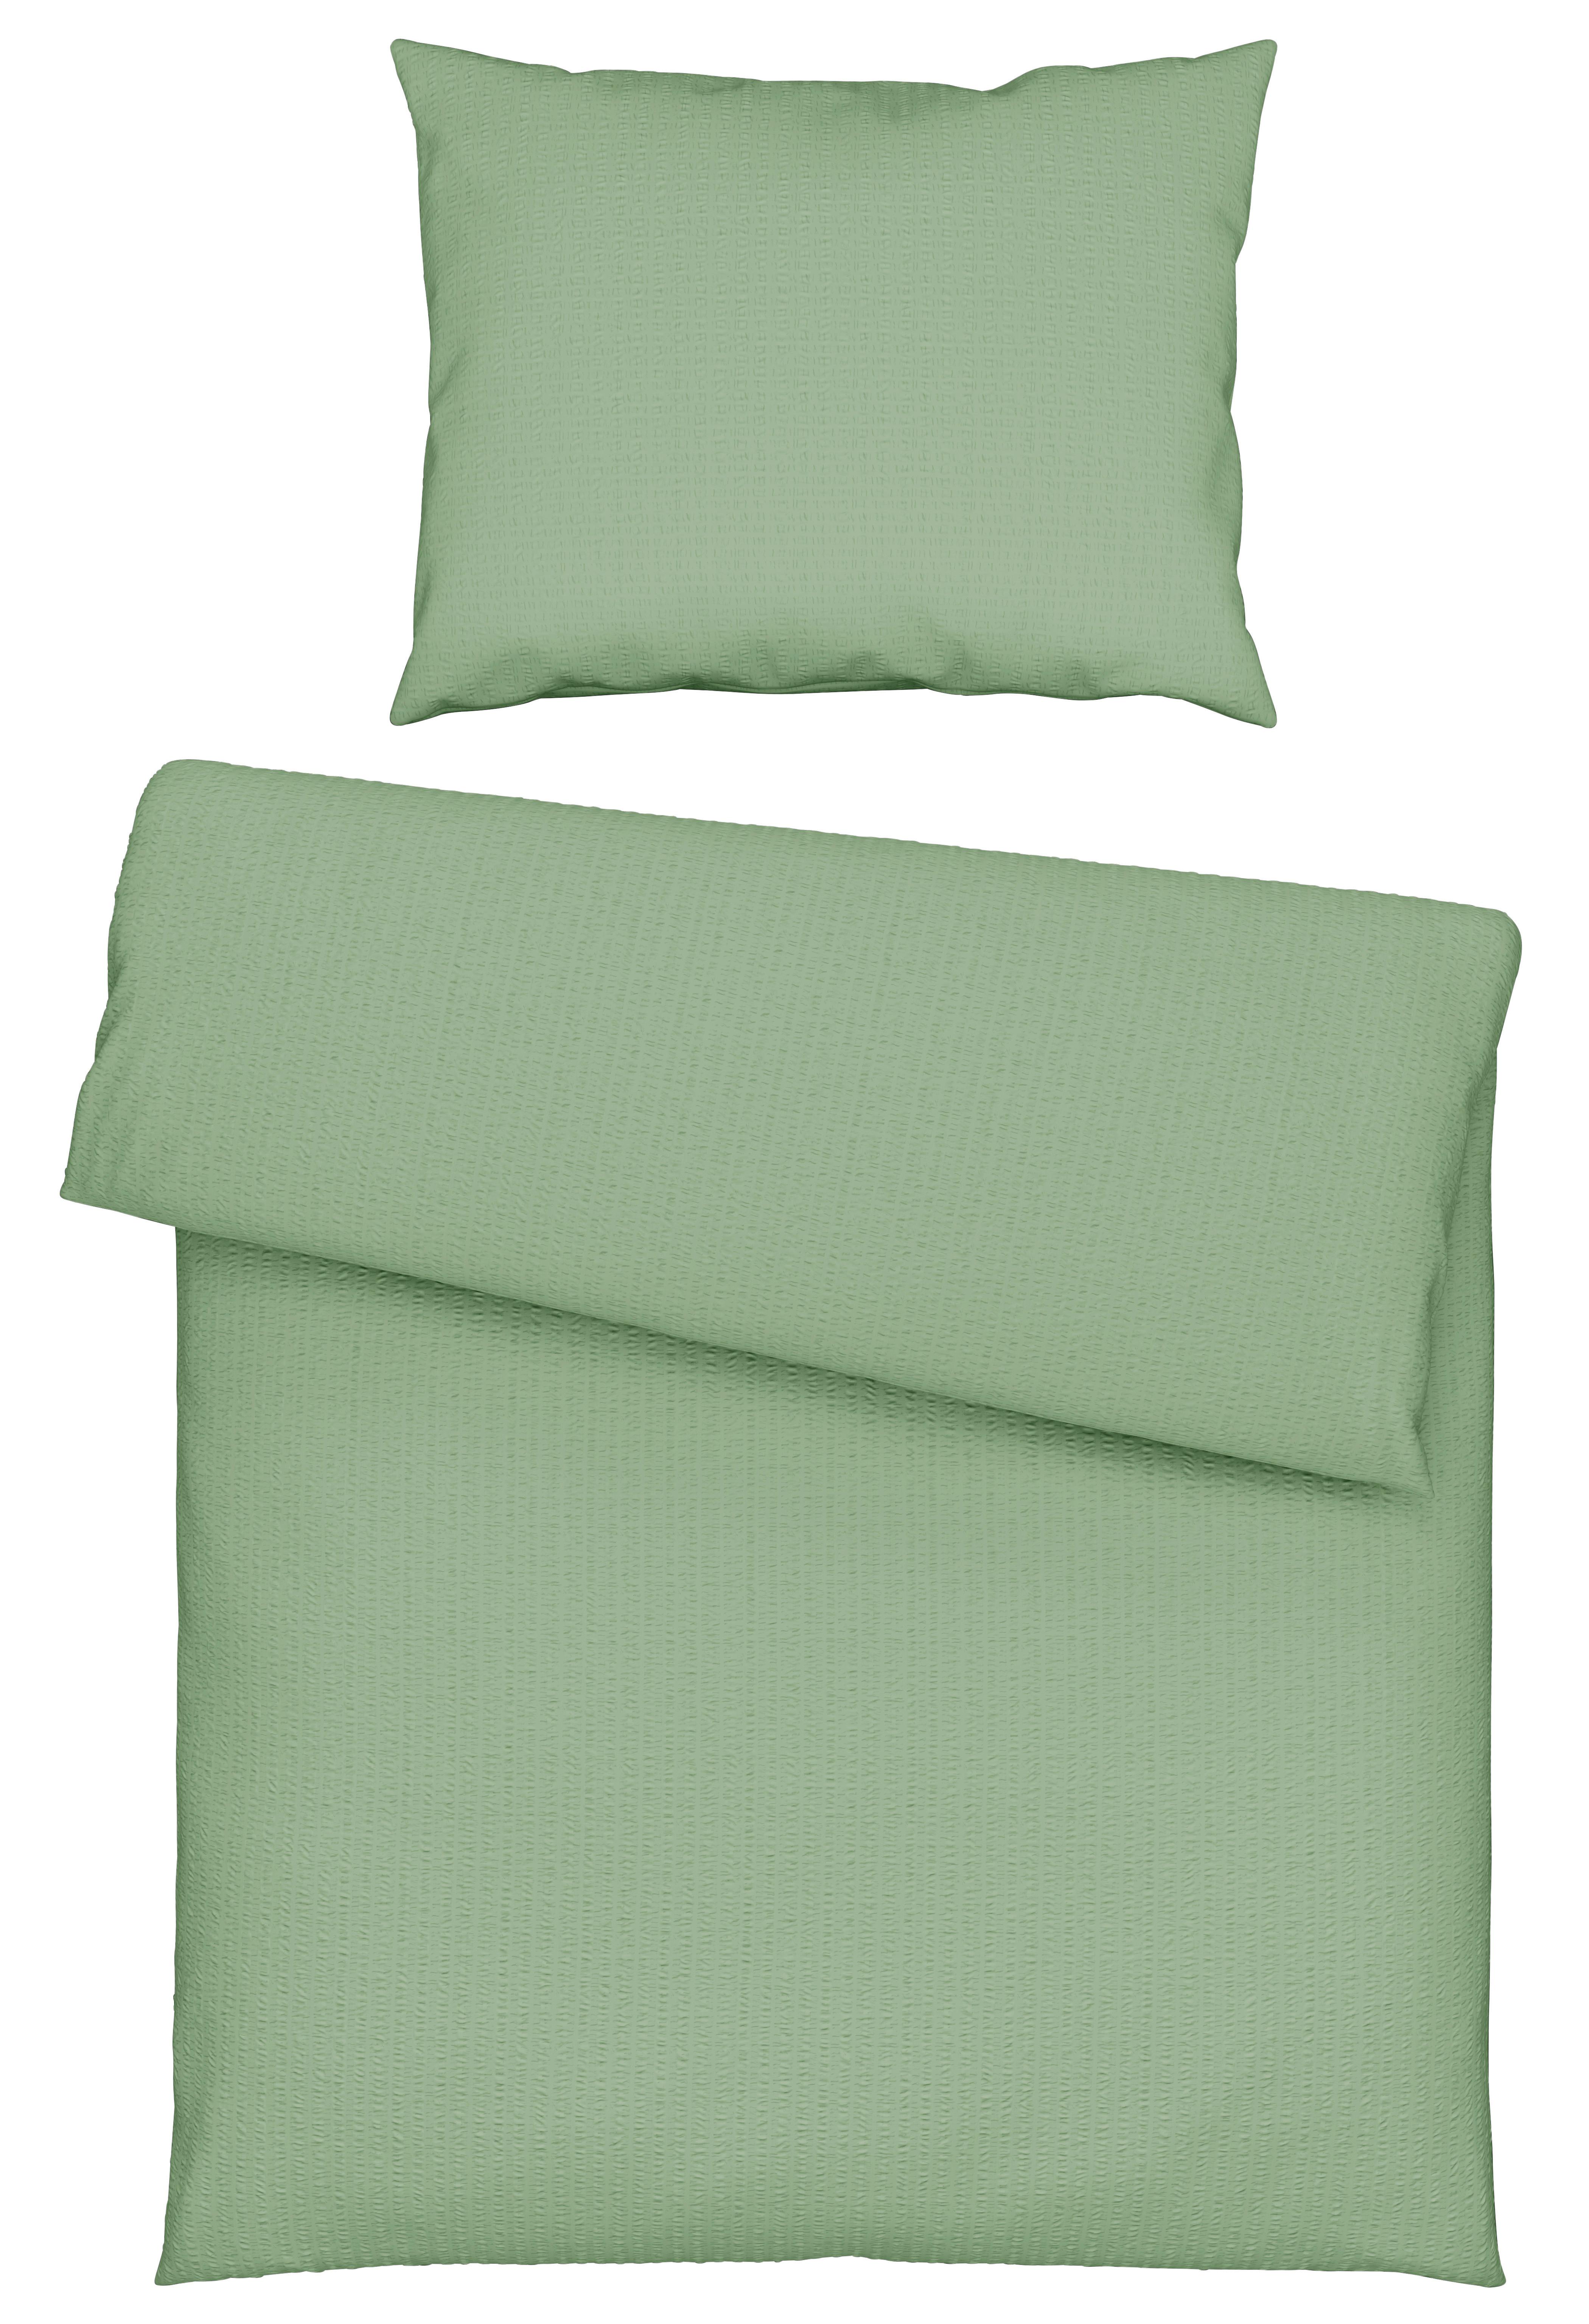 Posteľná Bielizeň Gisi, 140/200cm, Zelená - zelená, Konvenčný, textil (140/200cm) - Modern Living